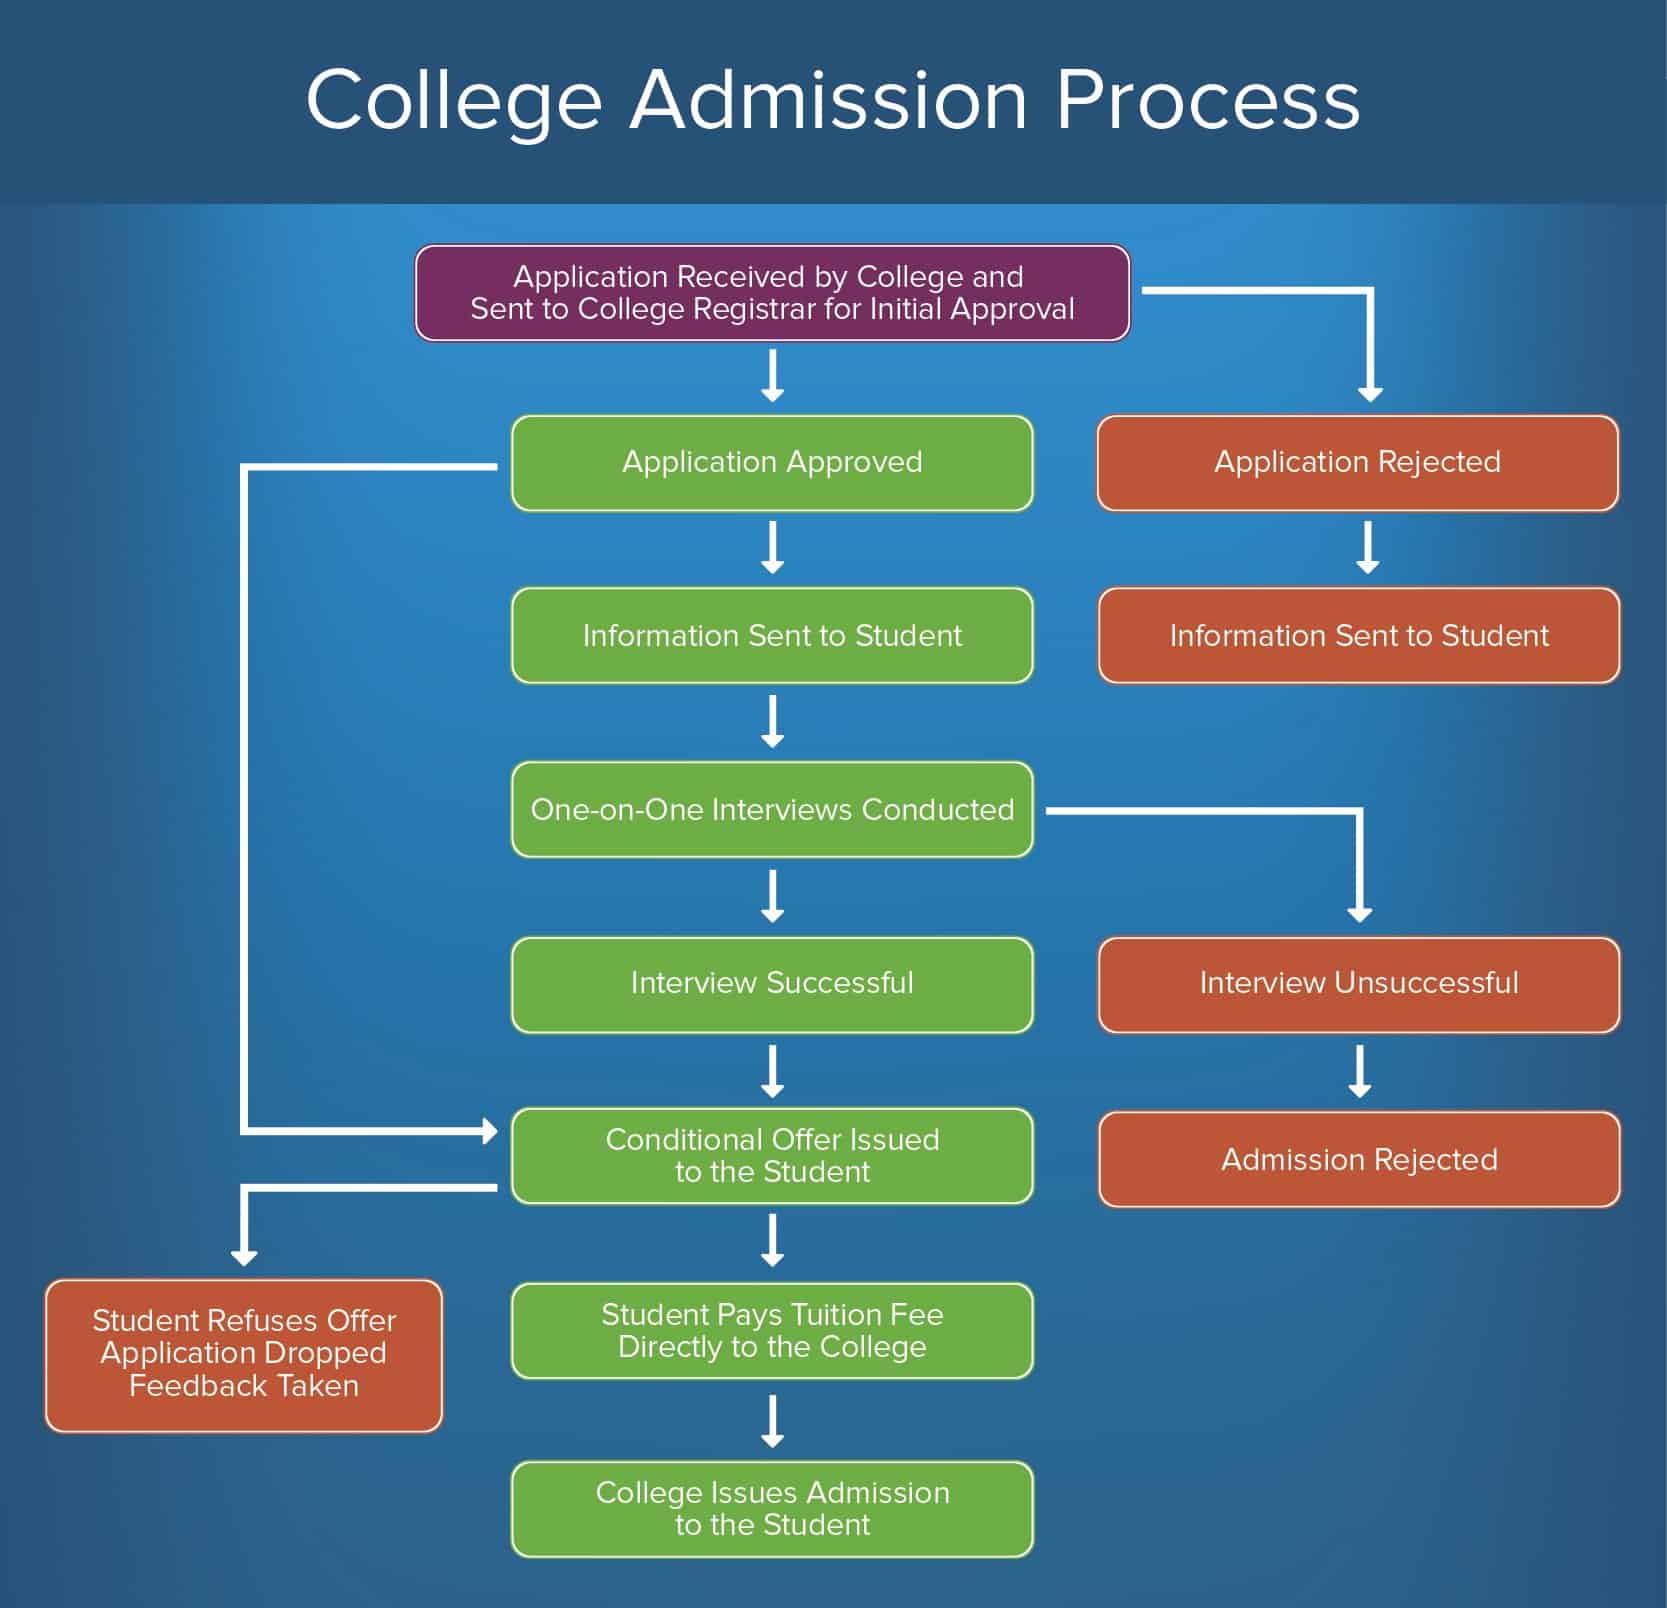 College Admission Process